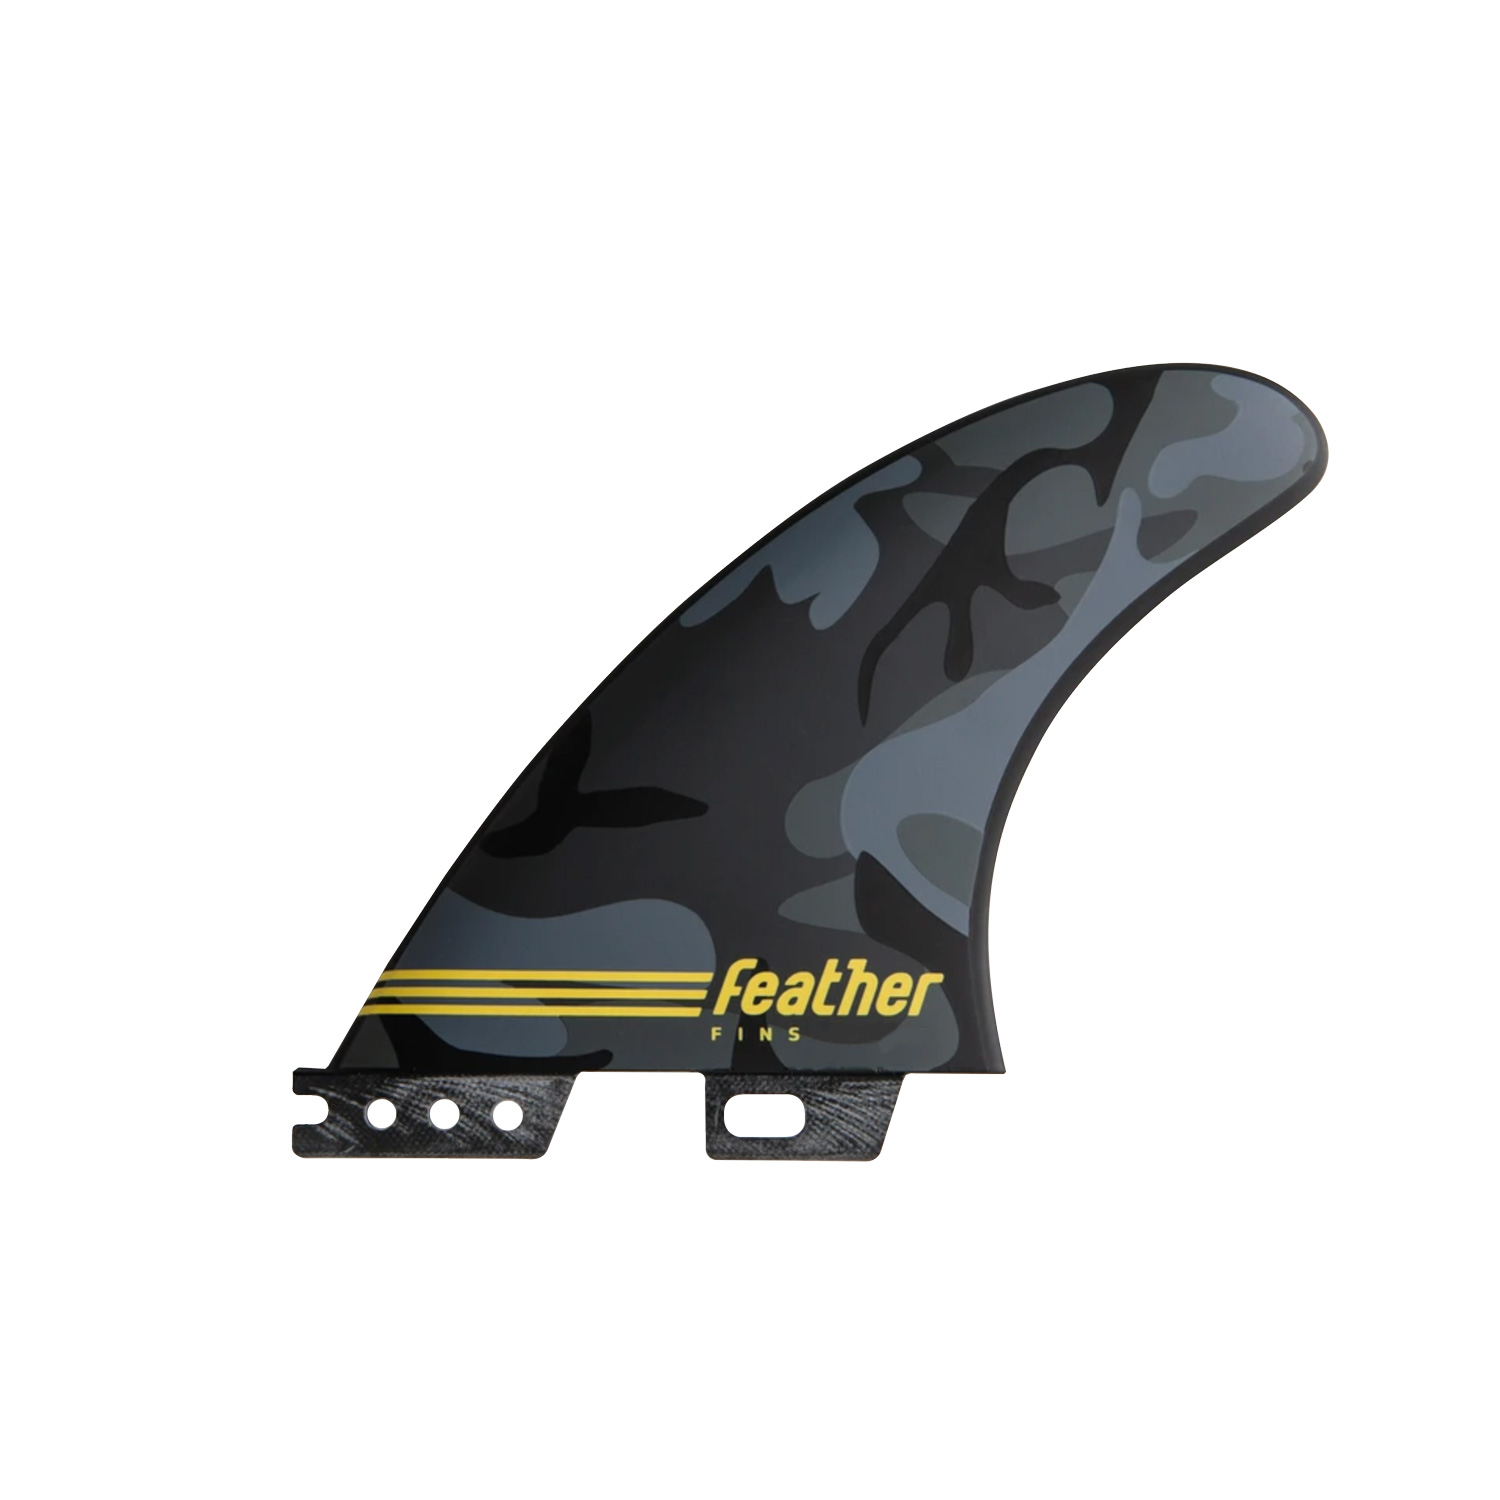 Feather Fins Joan Duru Athlete Series Click Tab – Thruster 3 spuras